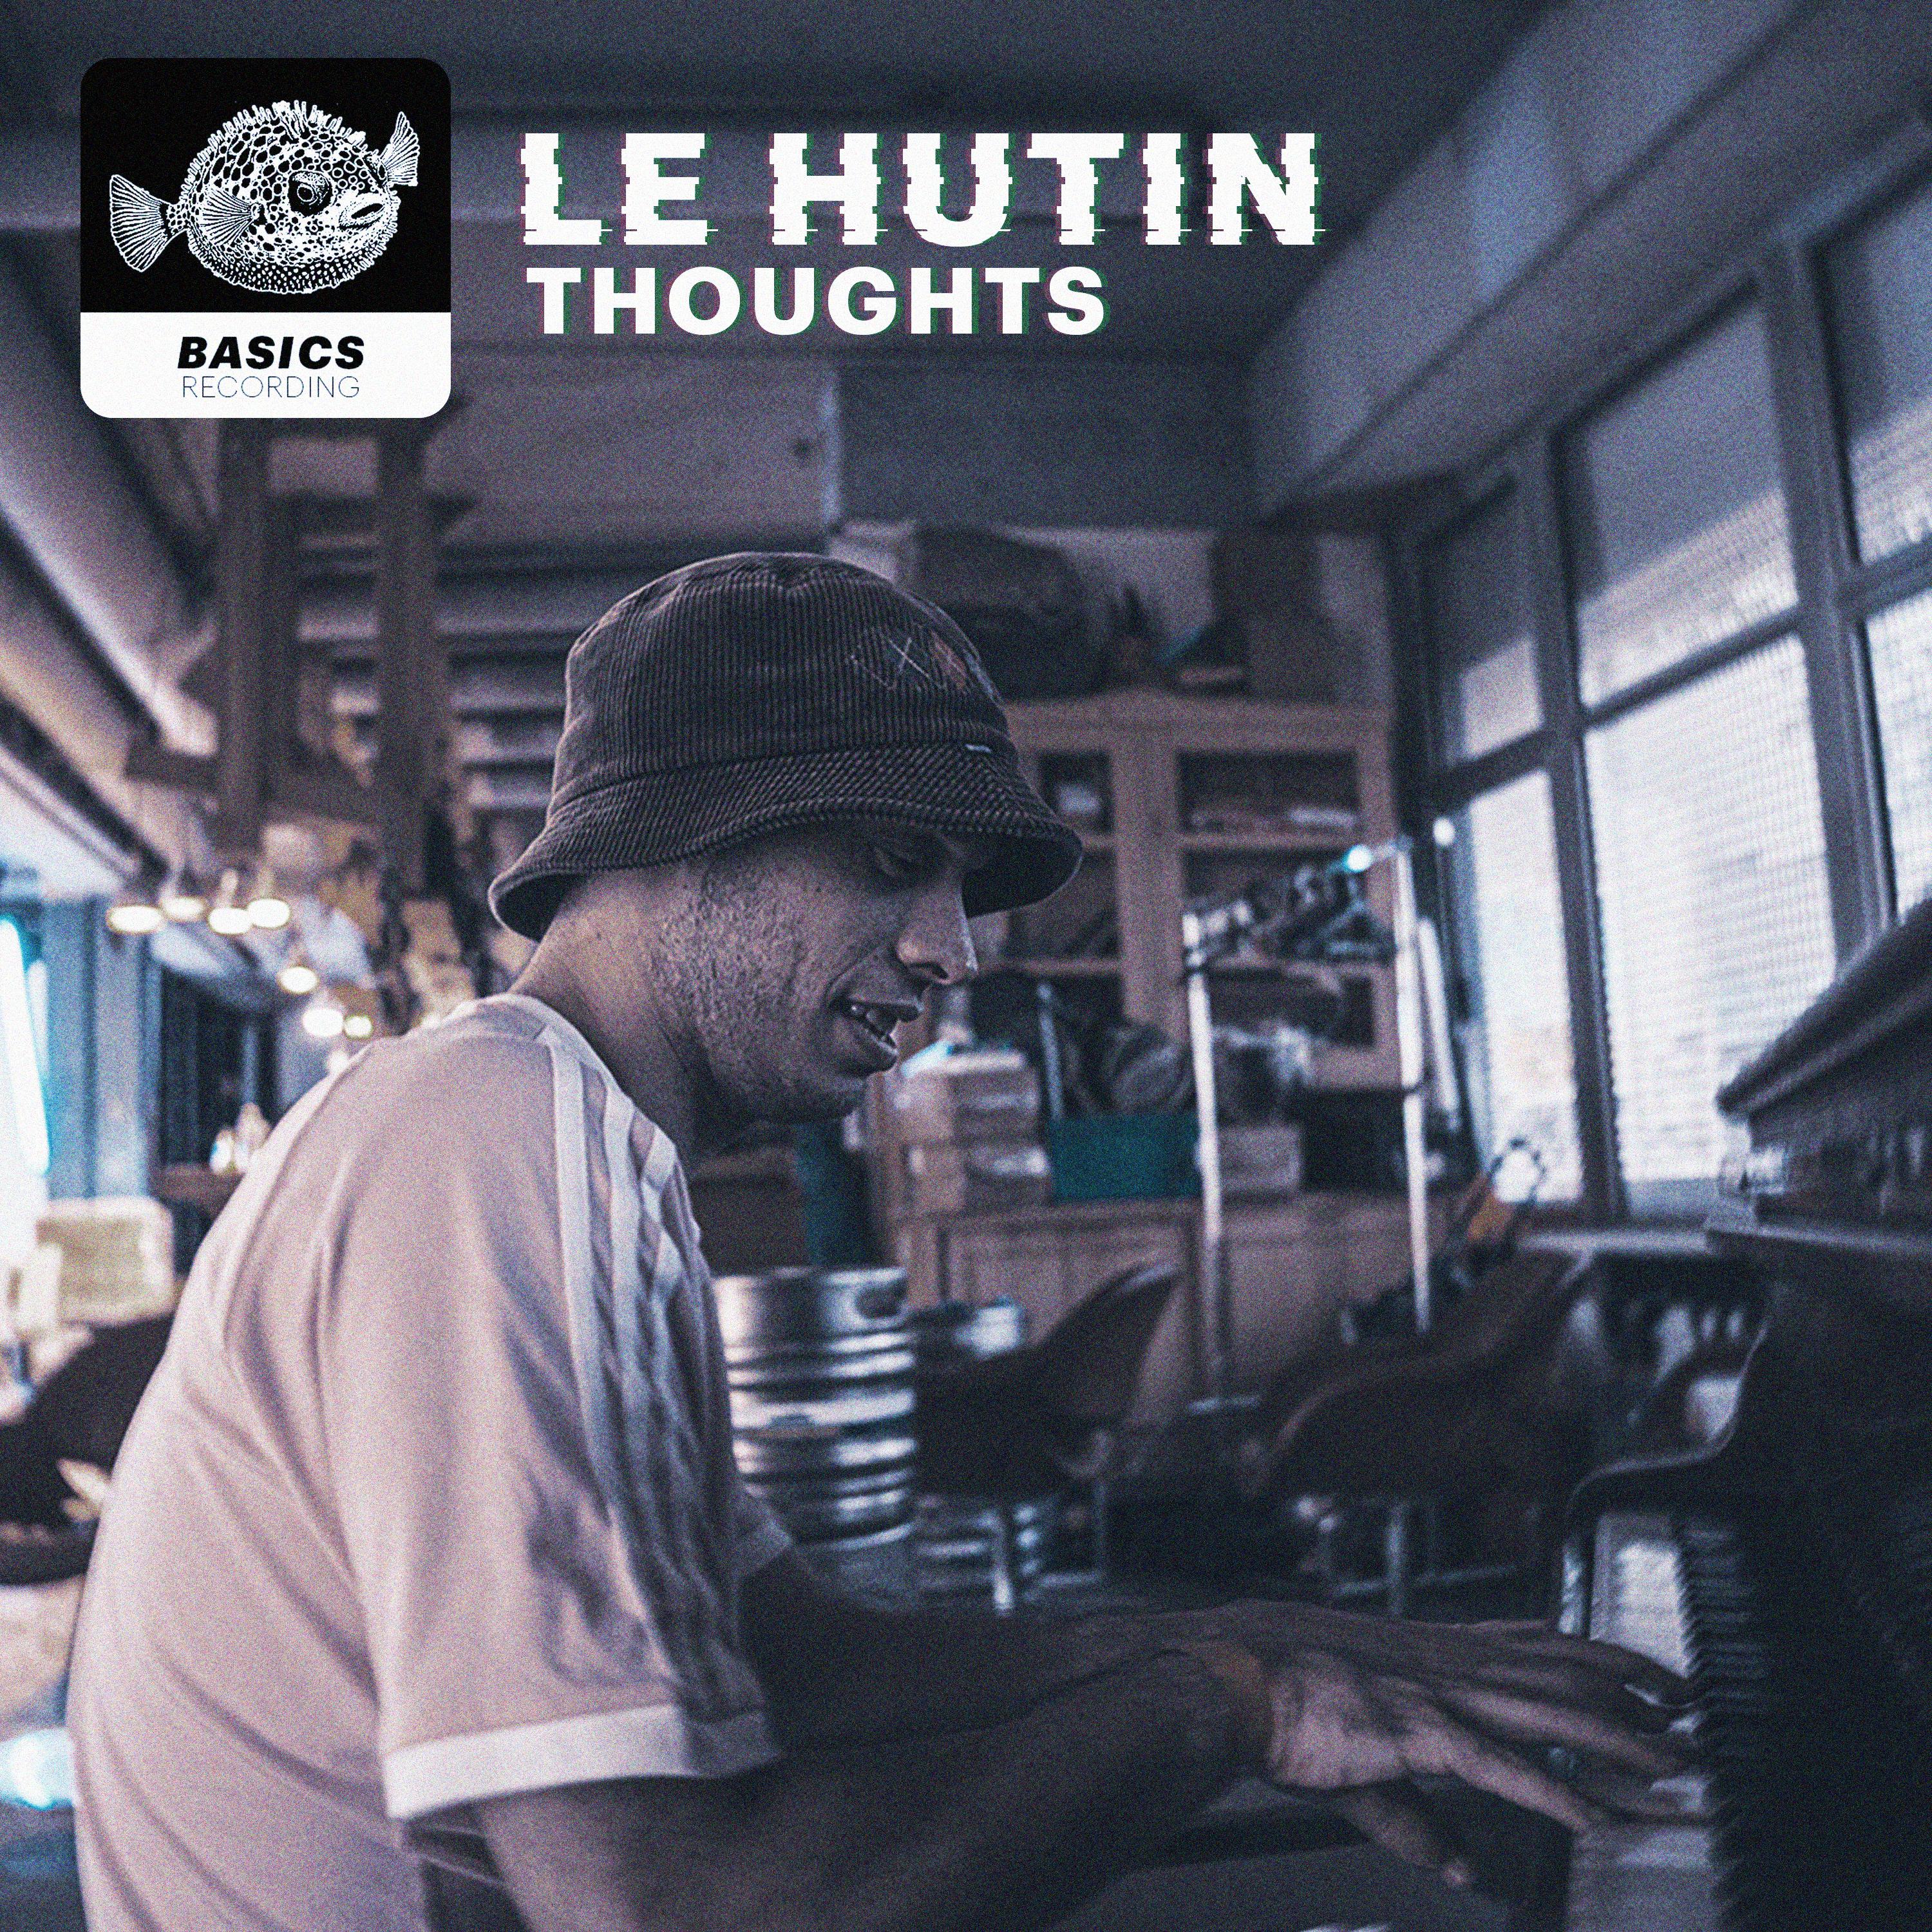 Le Hutin - Thoughts (Original Acoustic Mix)